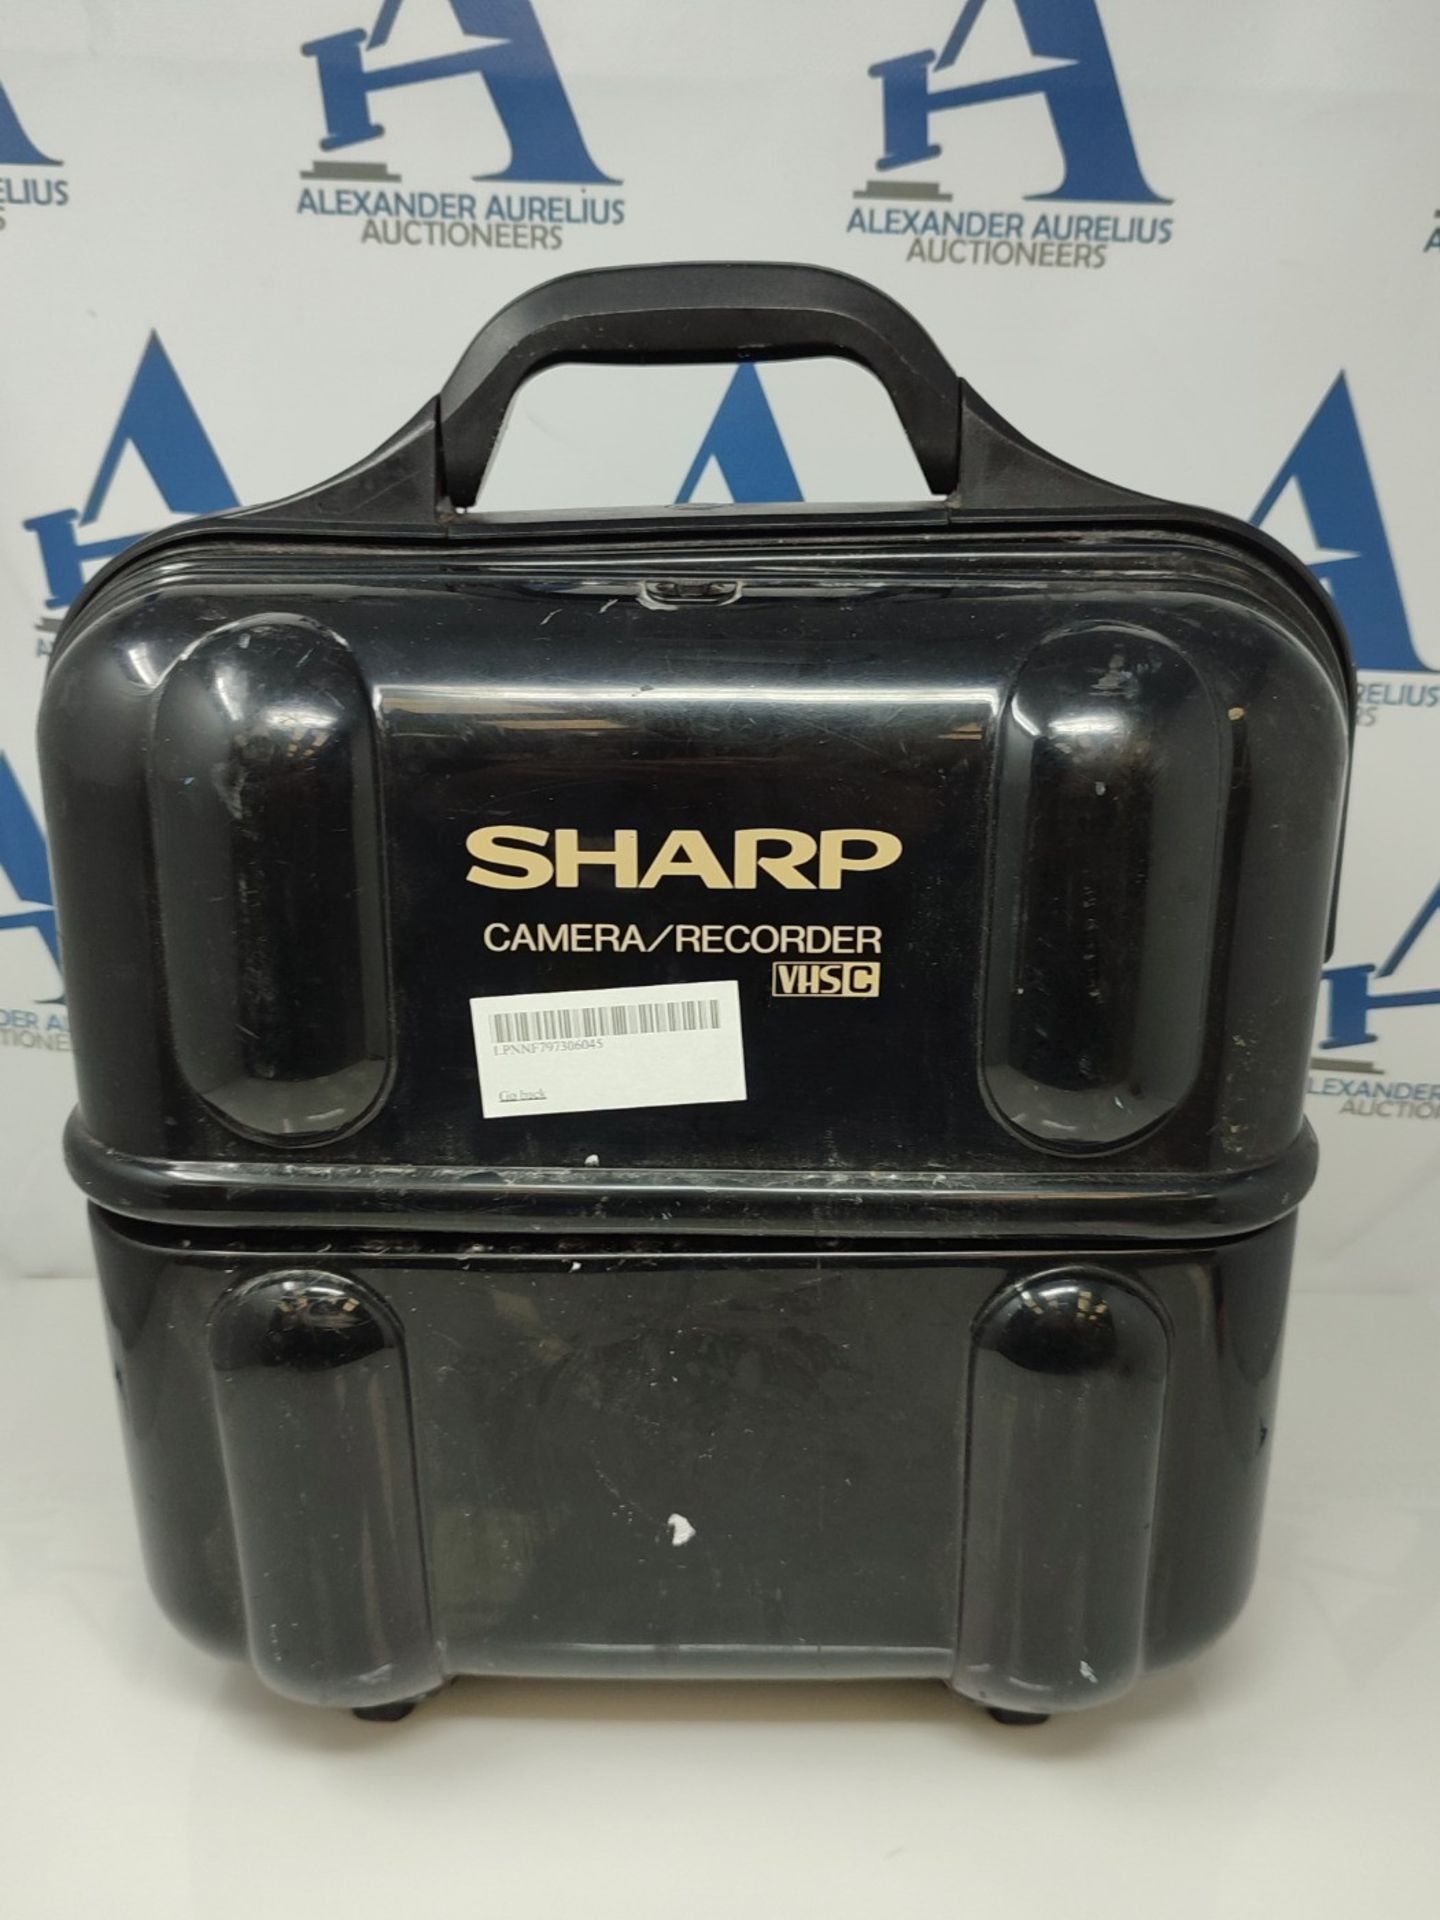 SHARP camera recorder model no. VC-C50H - Image 2 of 2